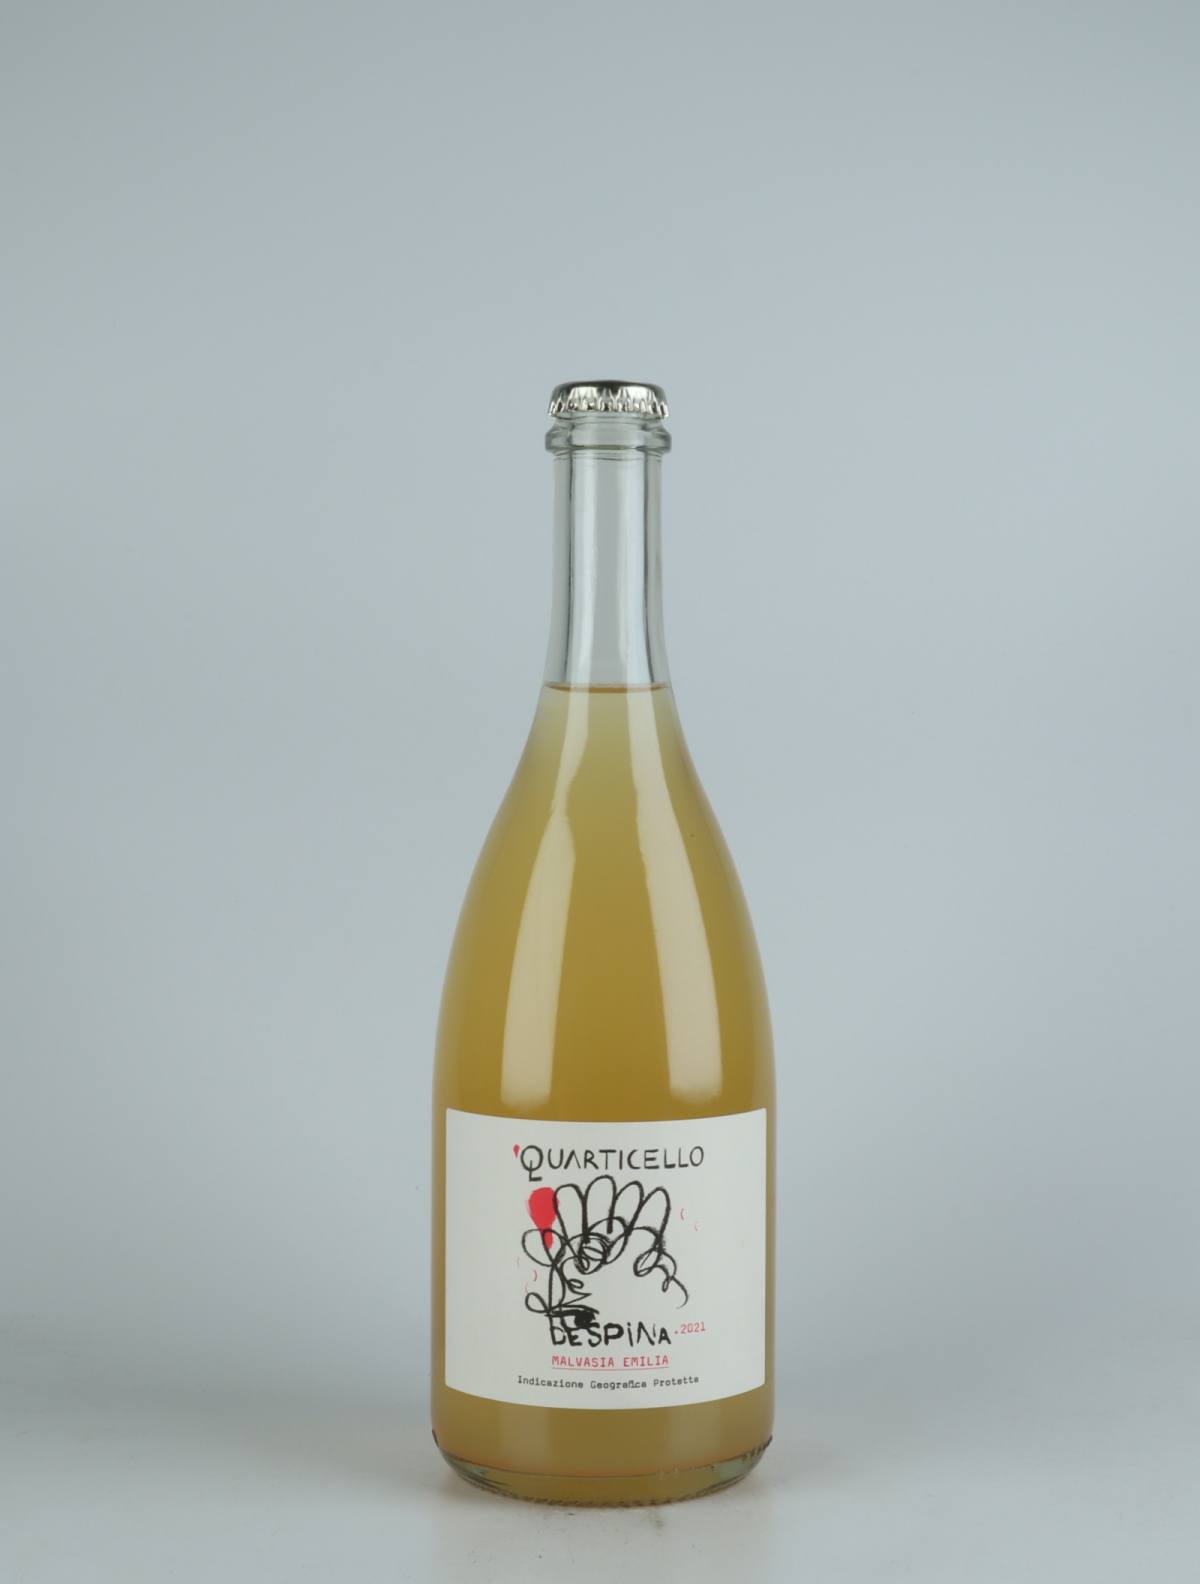 A bottle 2021 Despina Sparkling from Quarticello, Emilia-Romagna in Italy